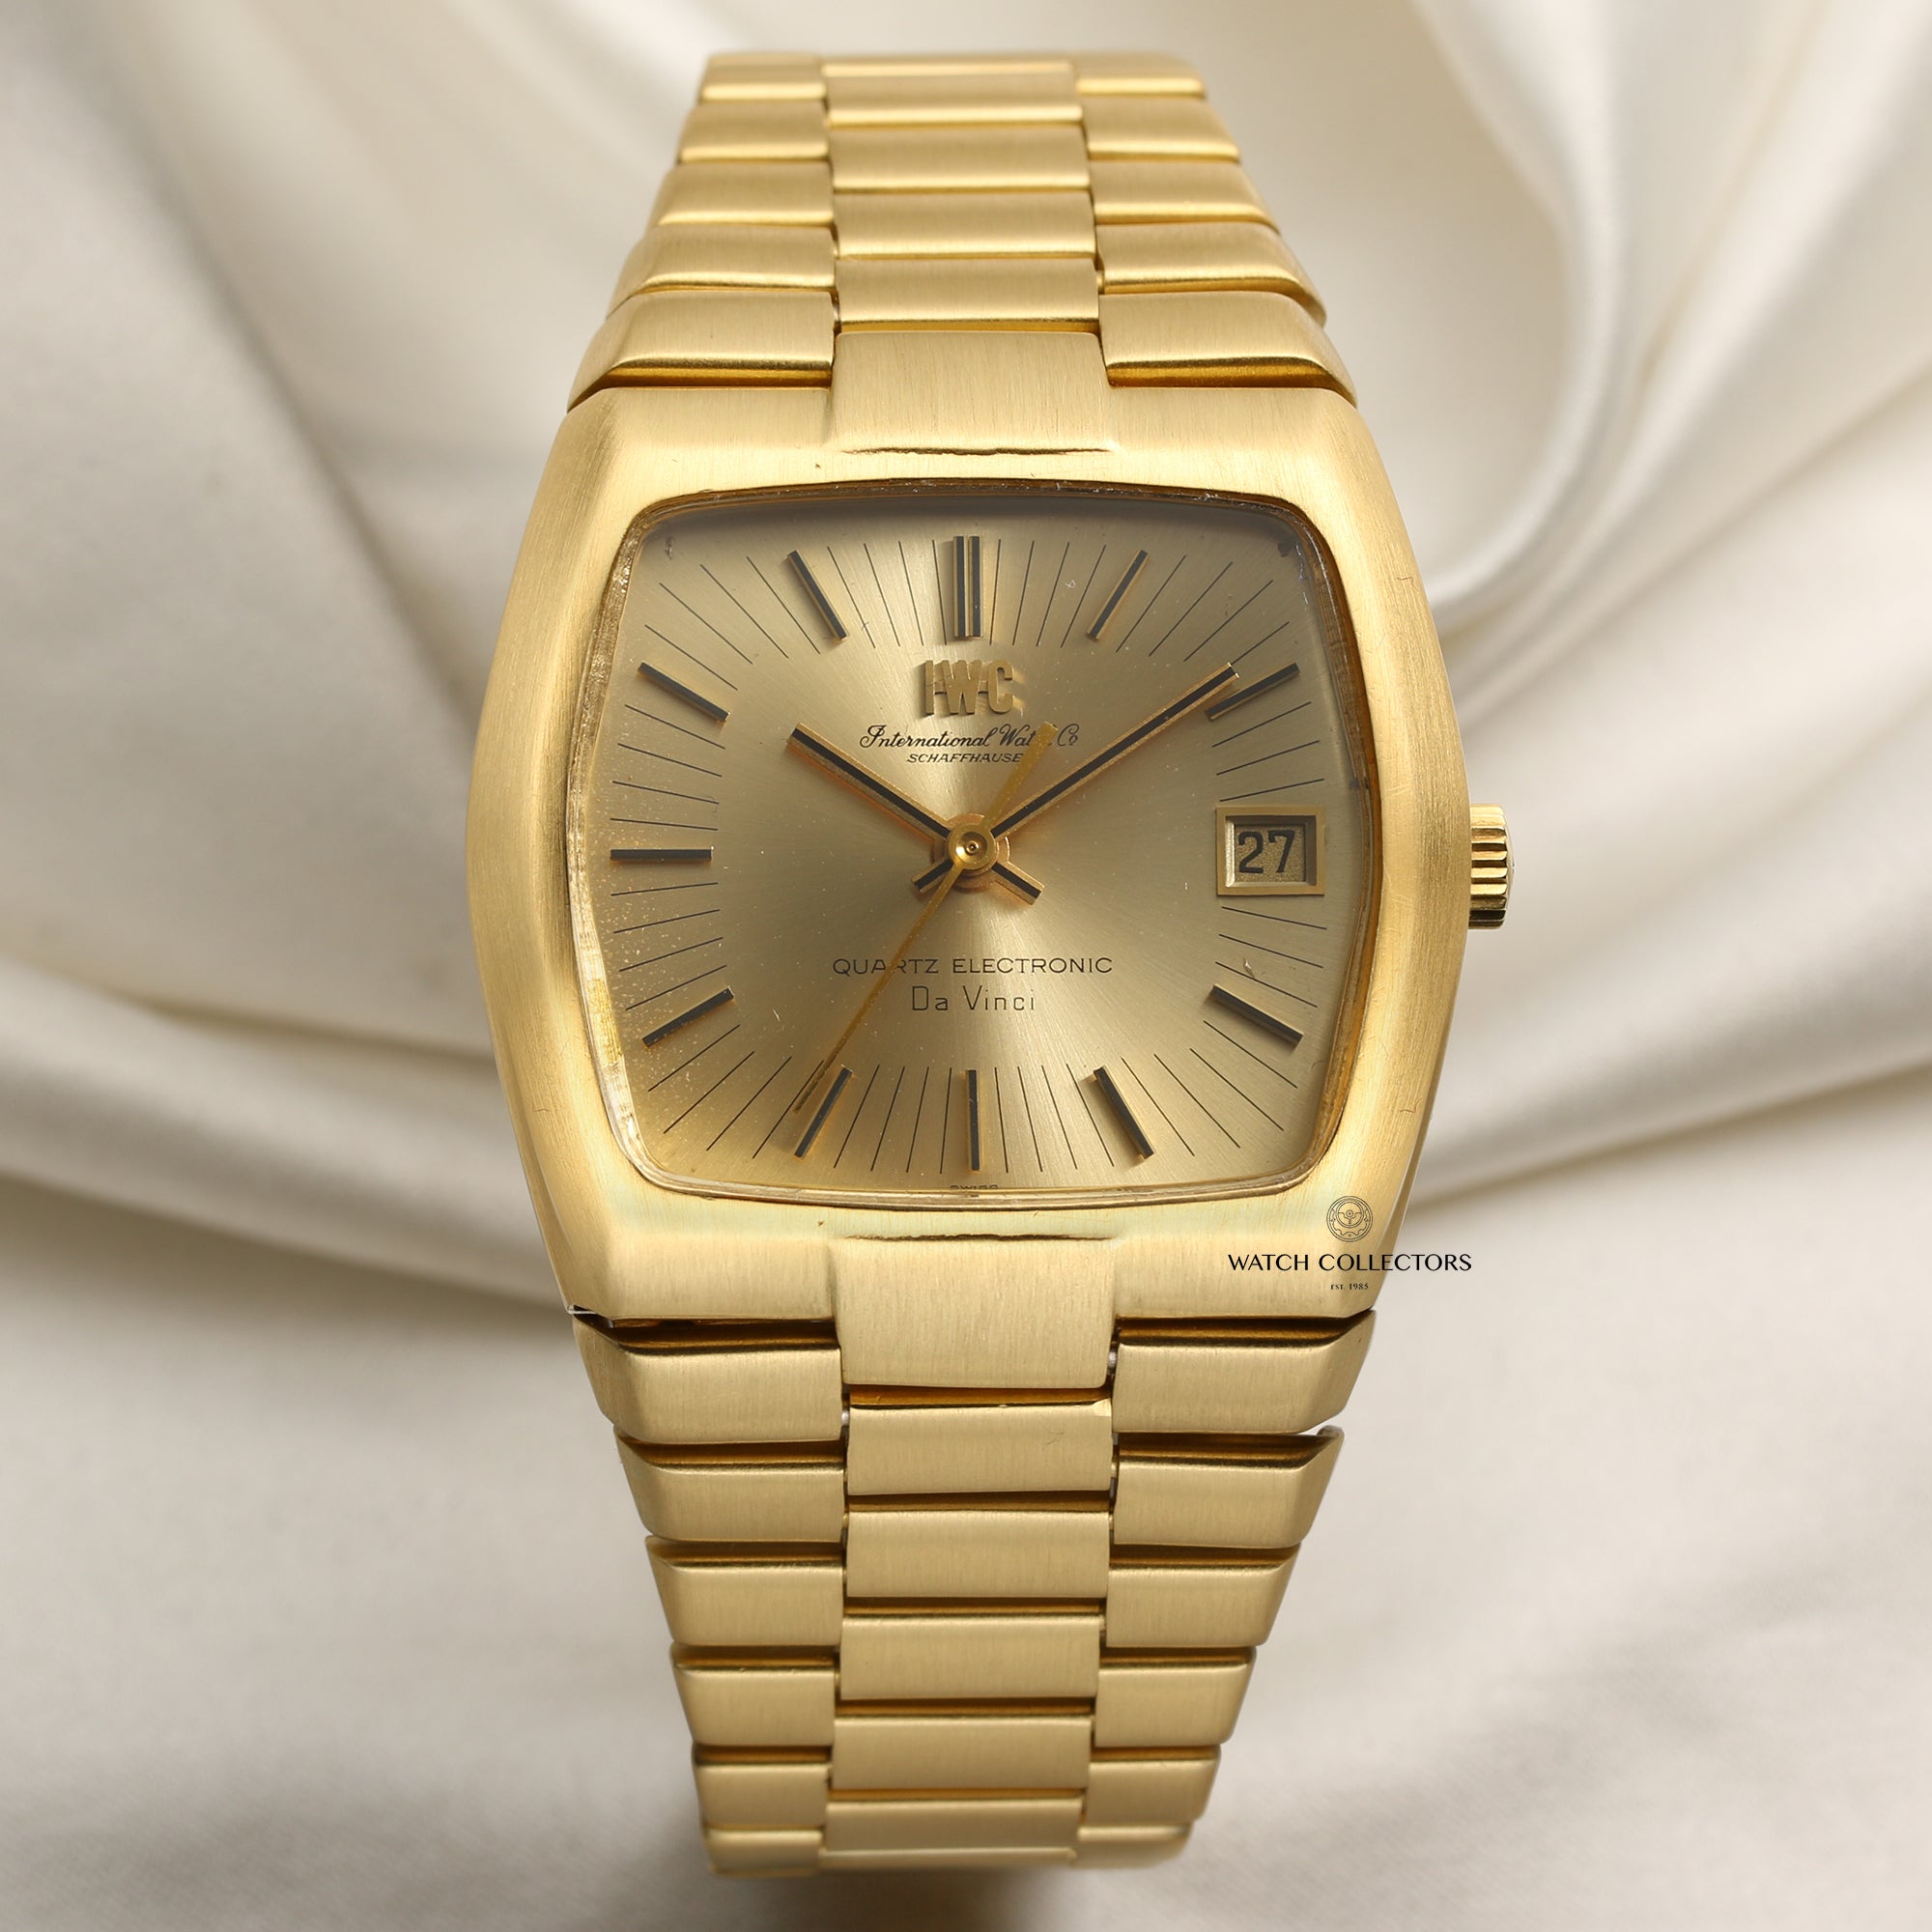 IWC Da Vinci Quartz Electronic 18k Yellow Gold 70's – Watch Collectors